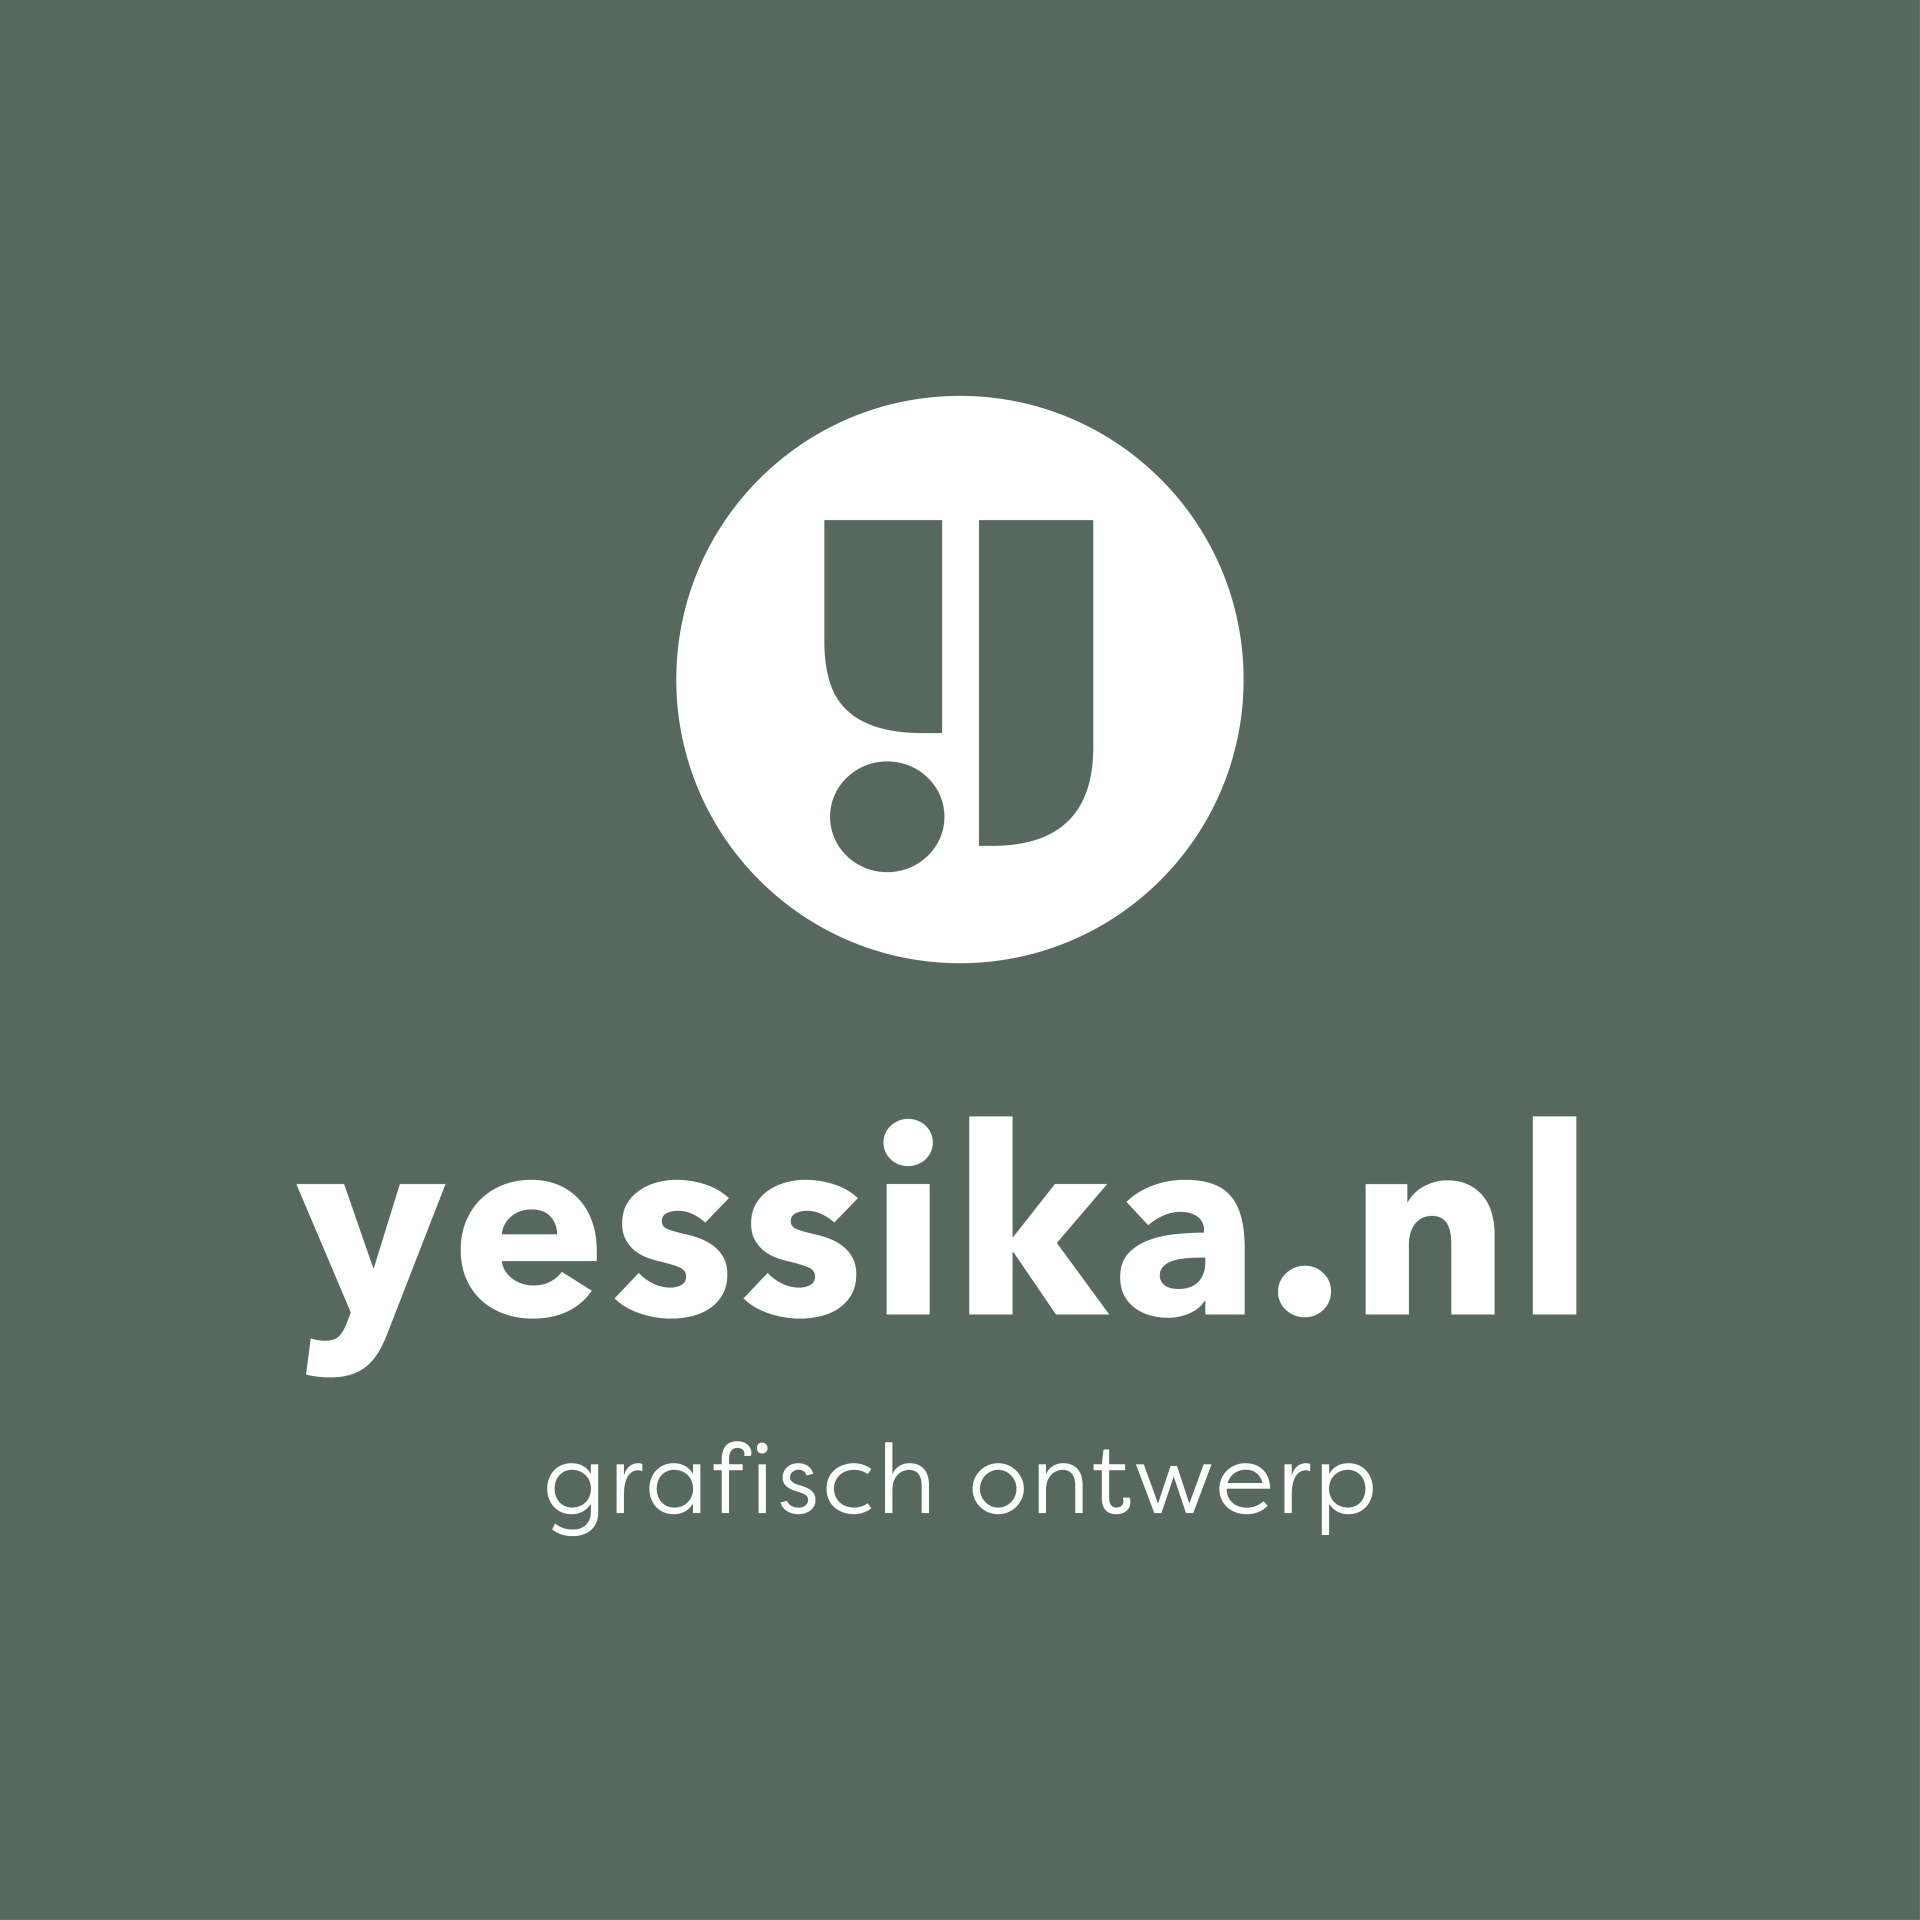 (c) Yessika.nl